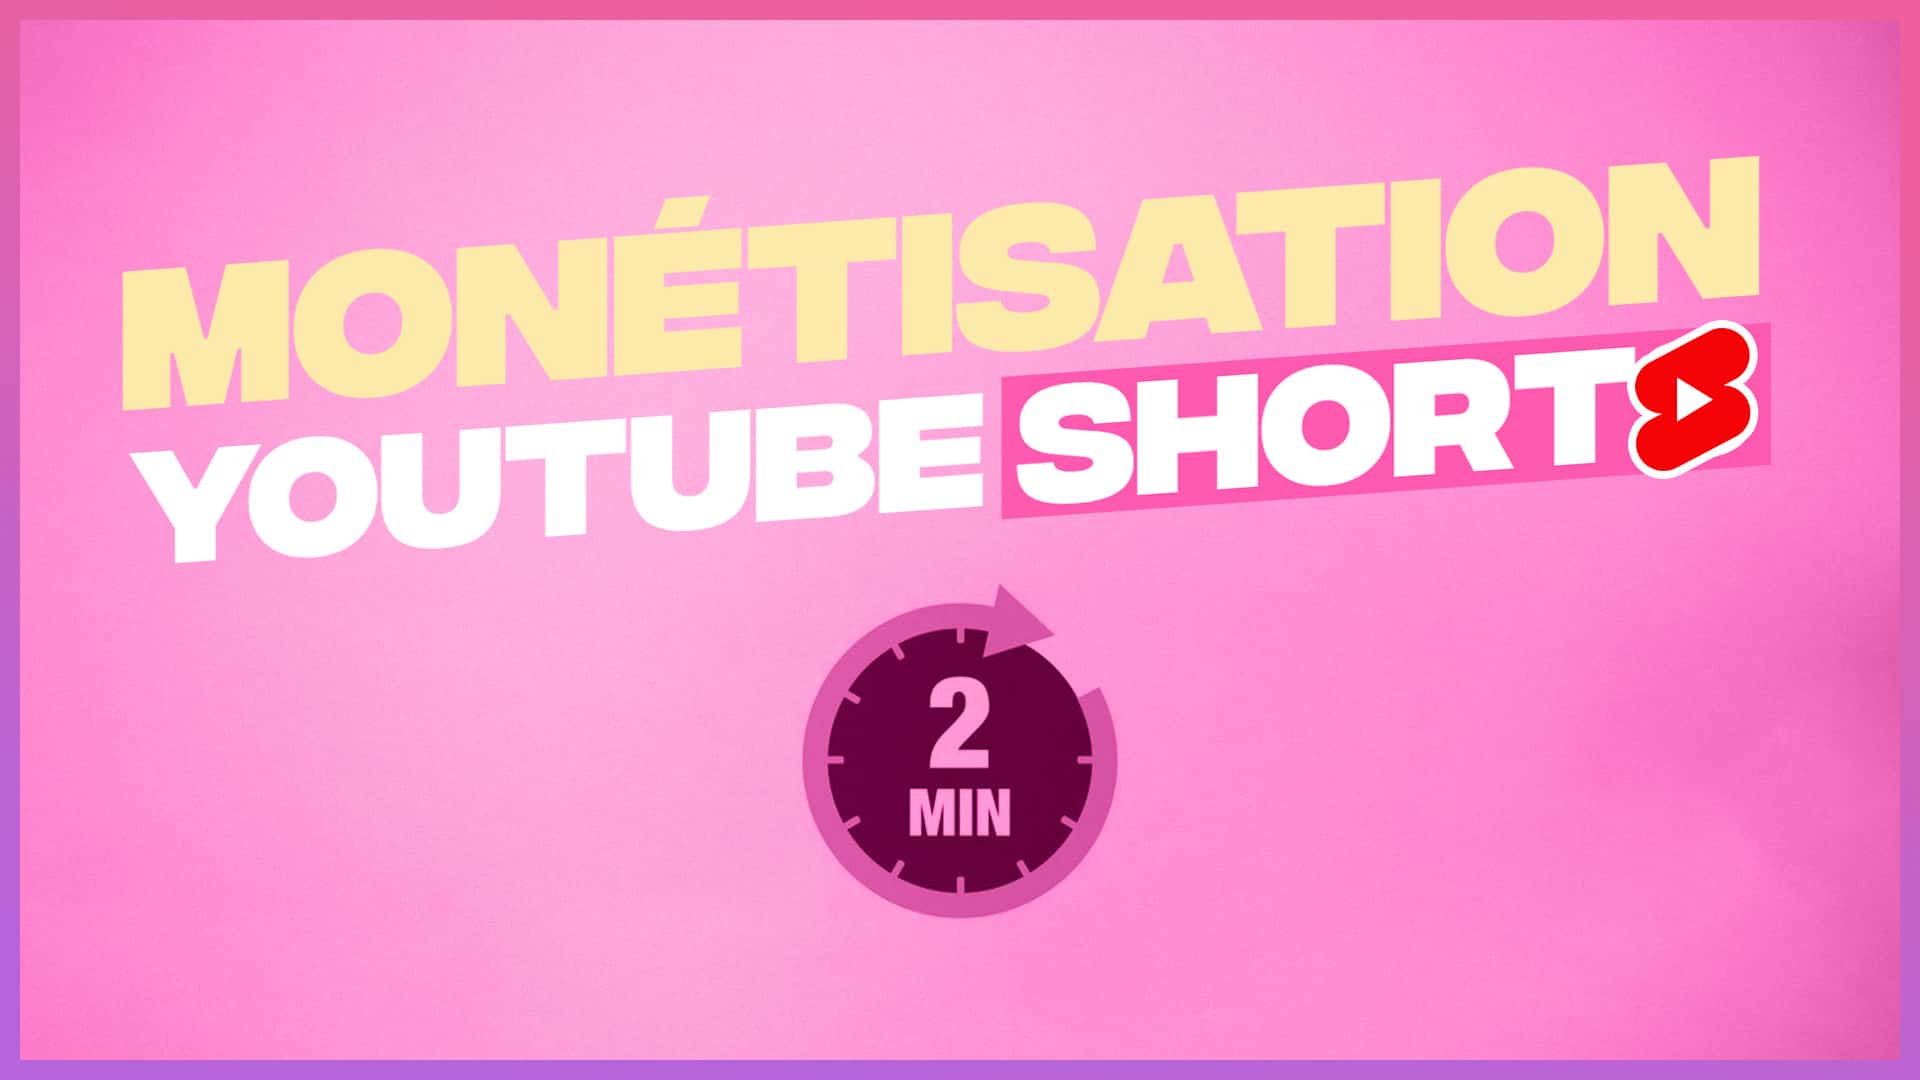 Monétisation YouTube Shorts : tout savoir en 2 mn